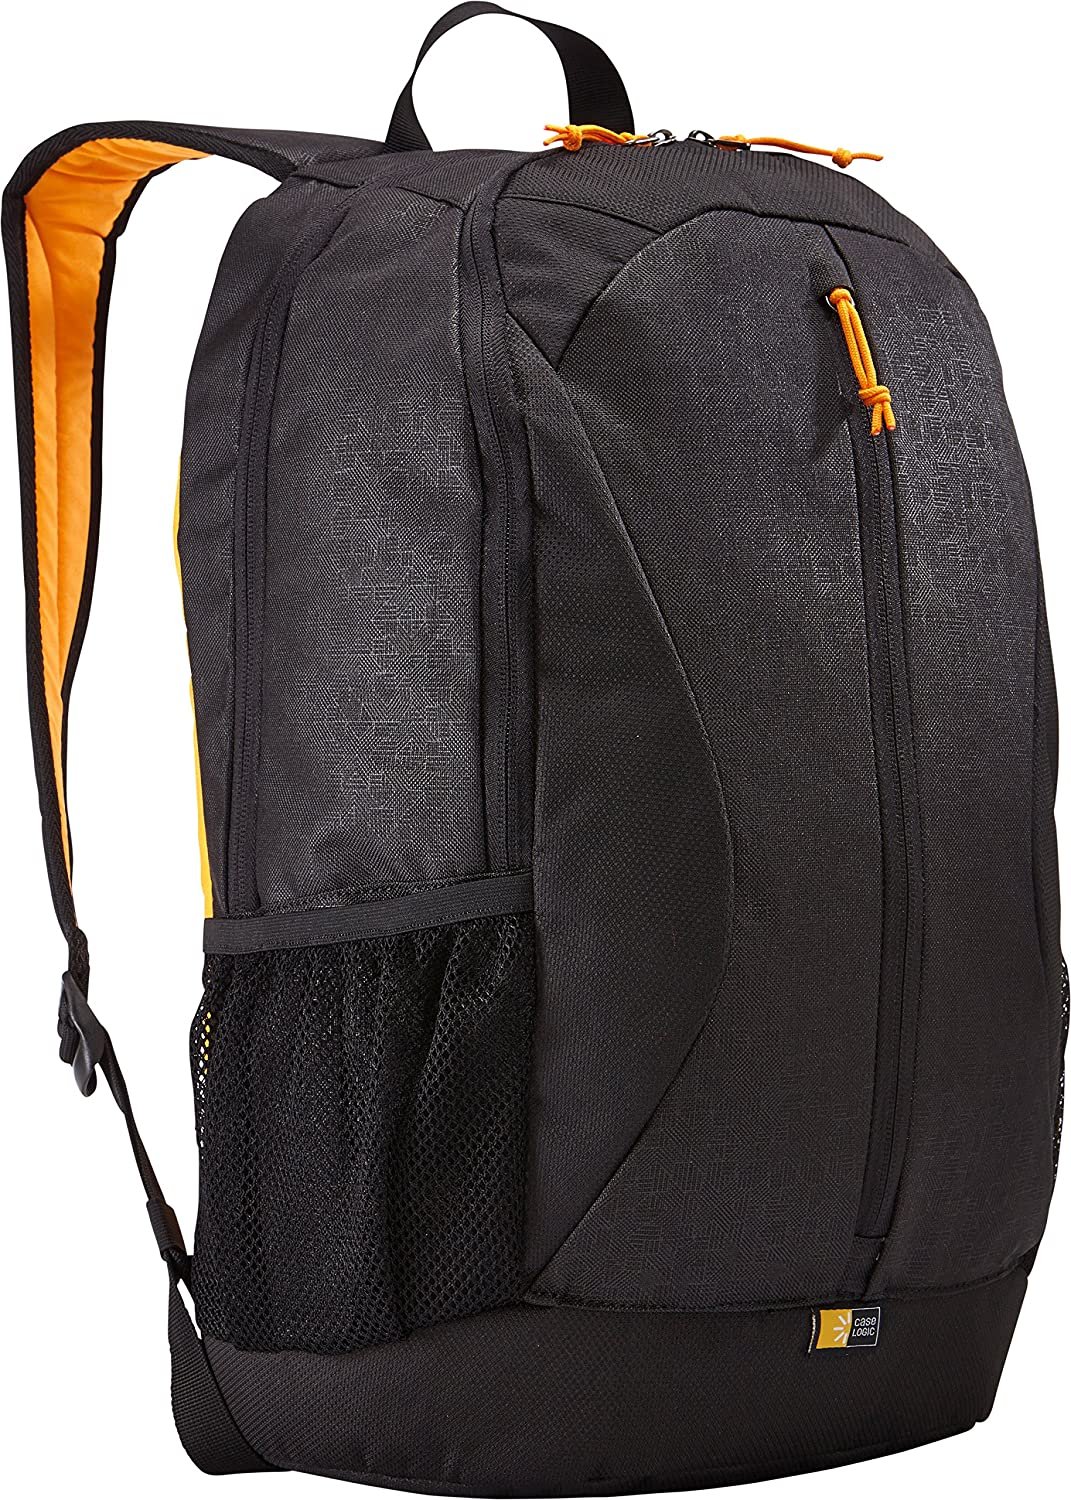 Case Logic Ibira Backpack IBIR-115Blk Laptops 15.6" & iPad 10.1" Tablet Pocket - Black - image 2 of 12